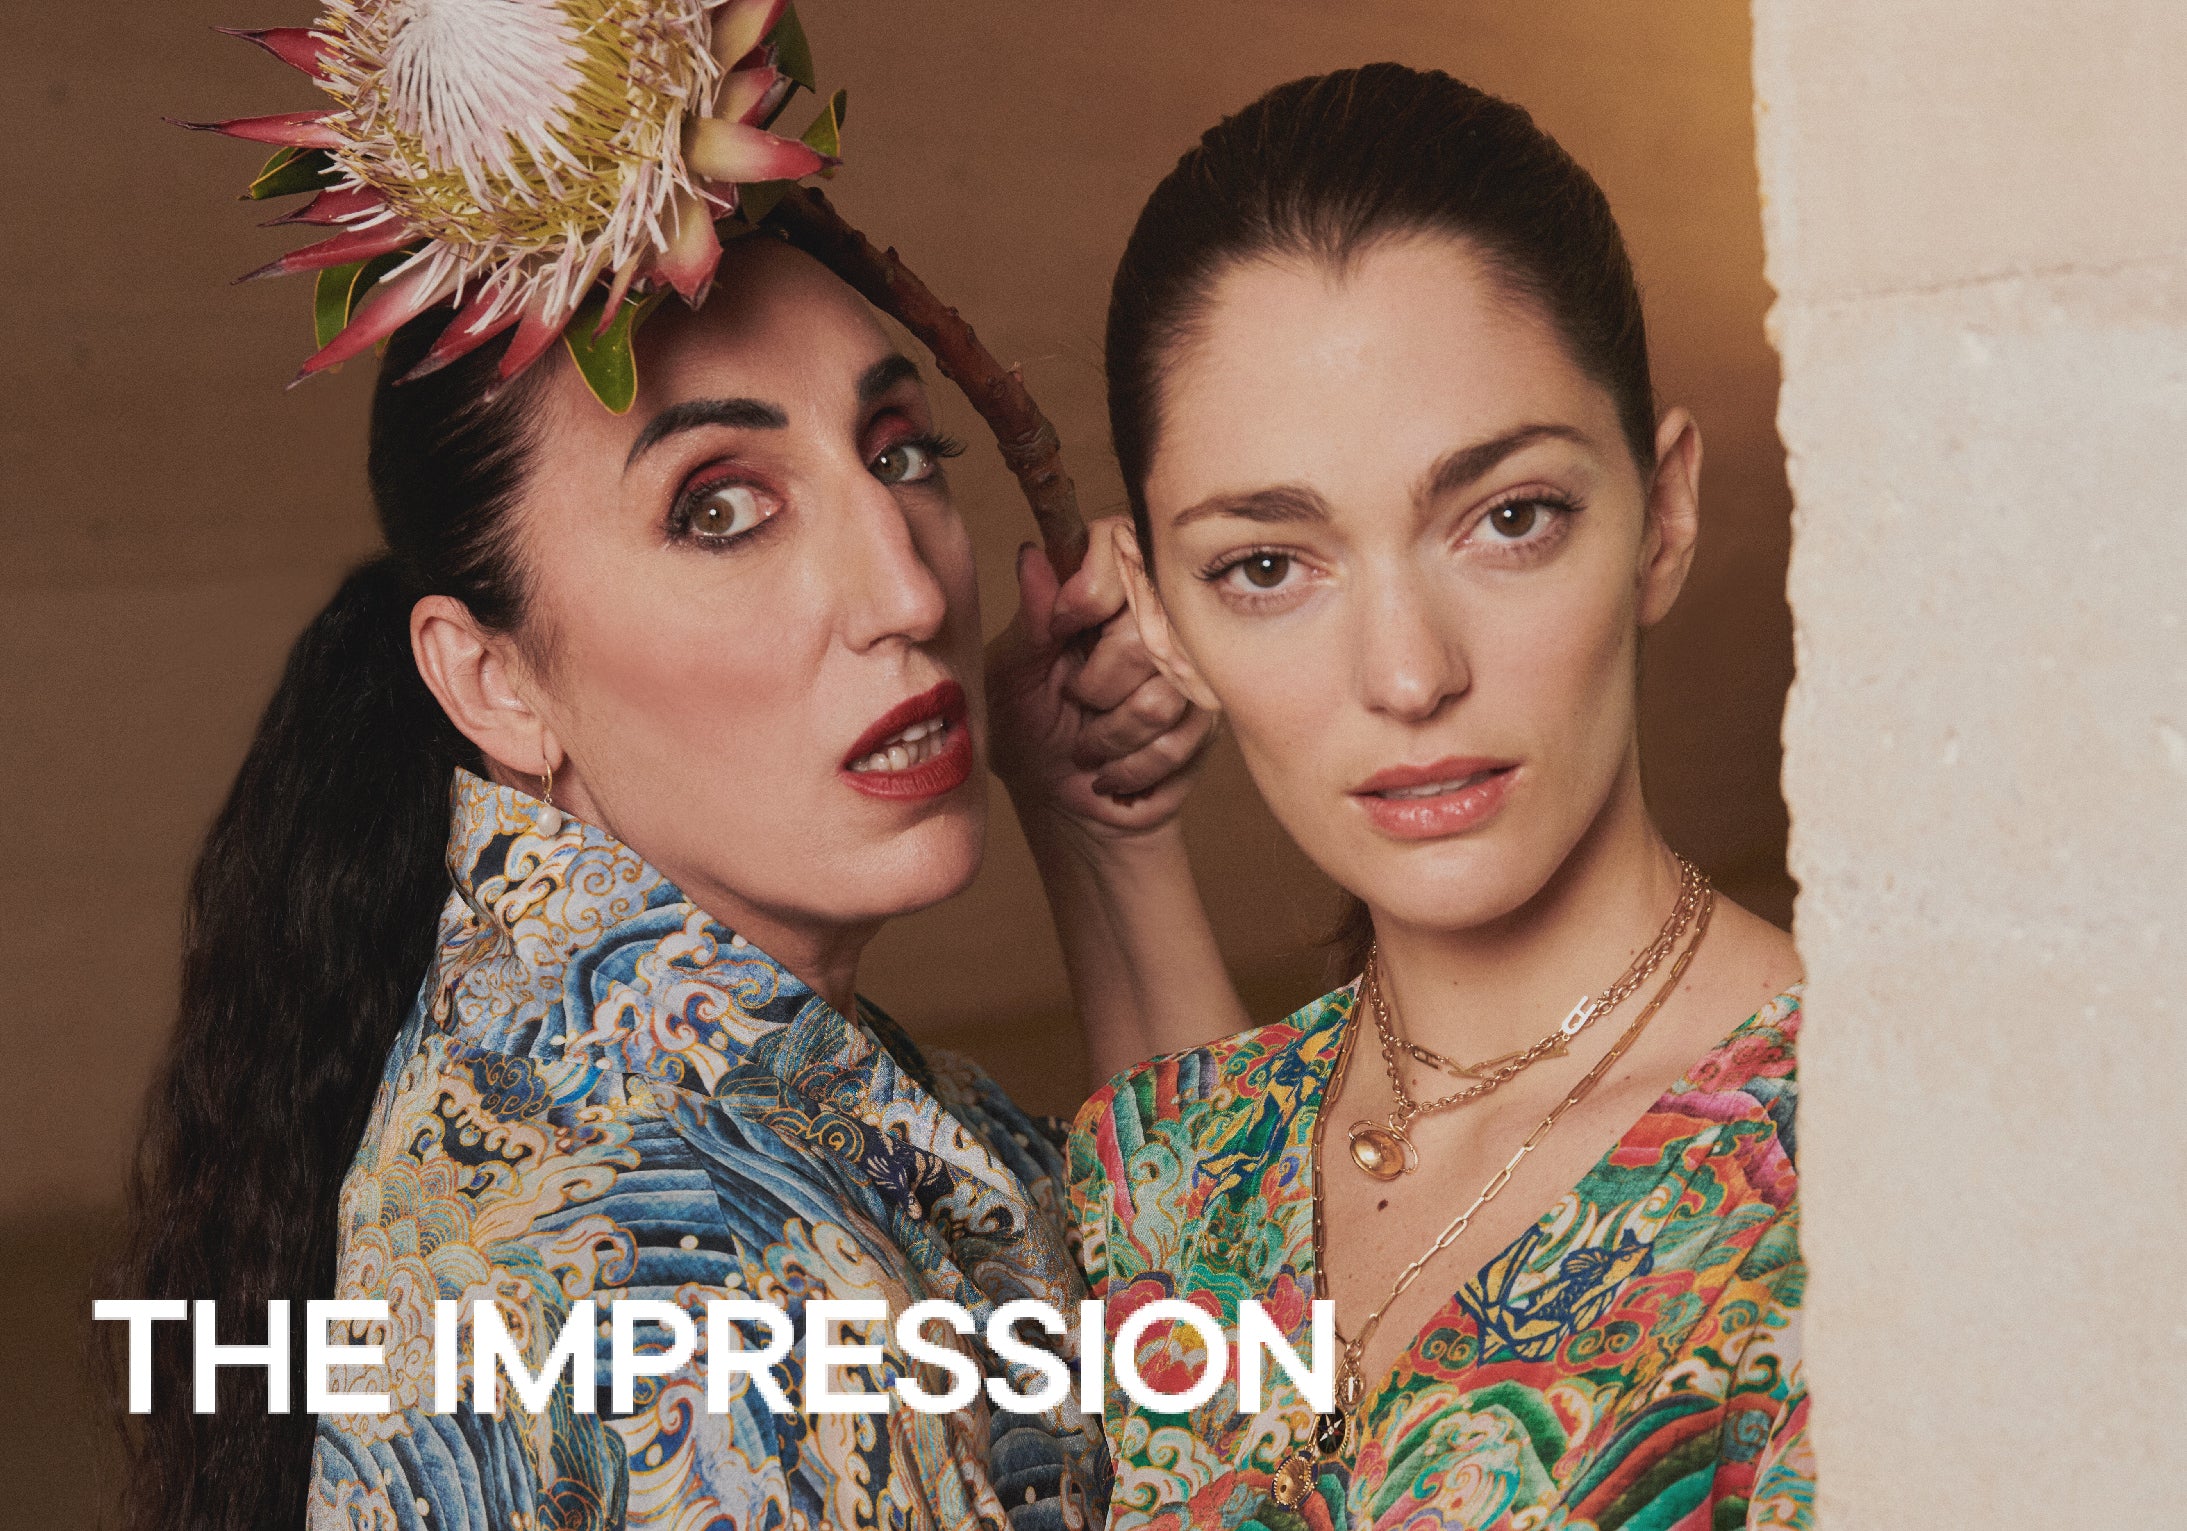 The Impression - Introducing Chufy x Rossy De Palma